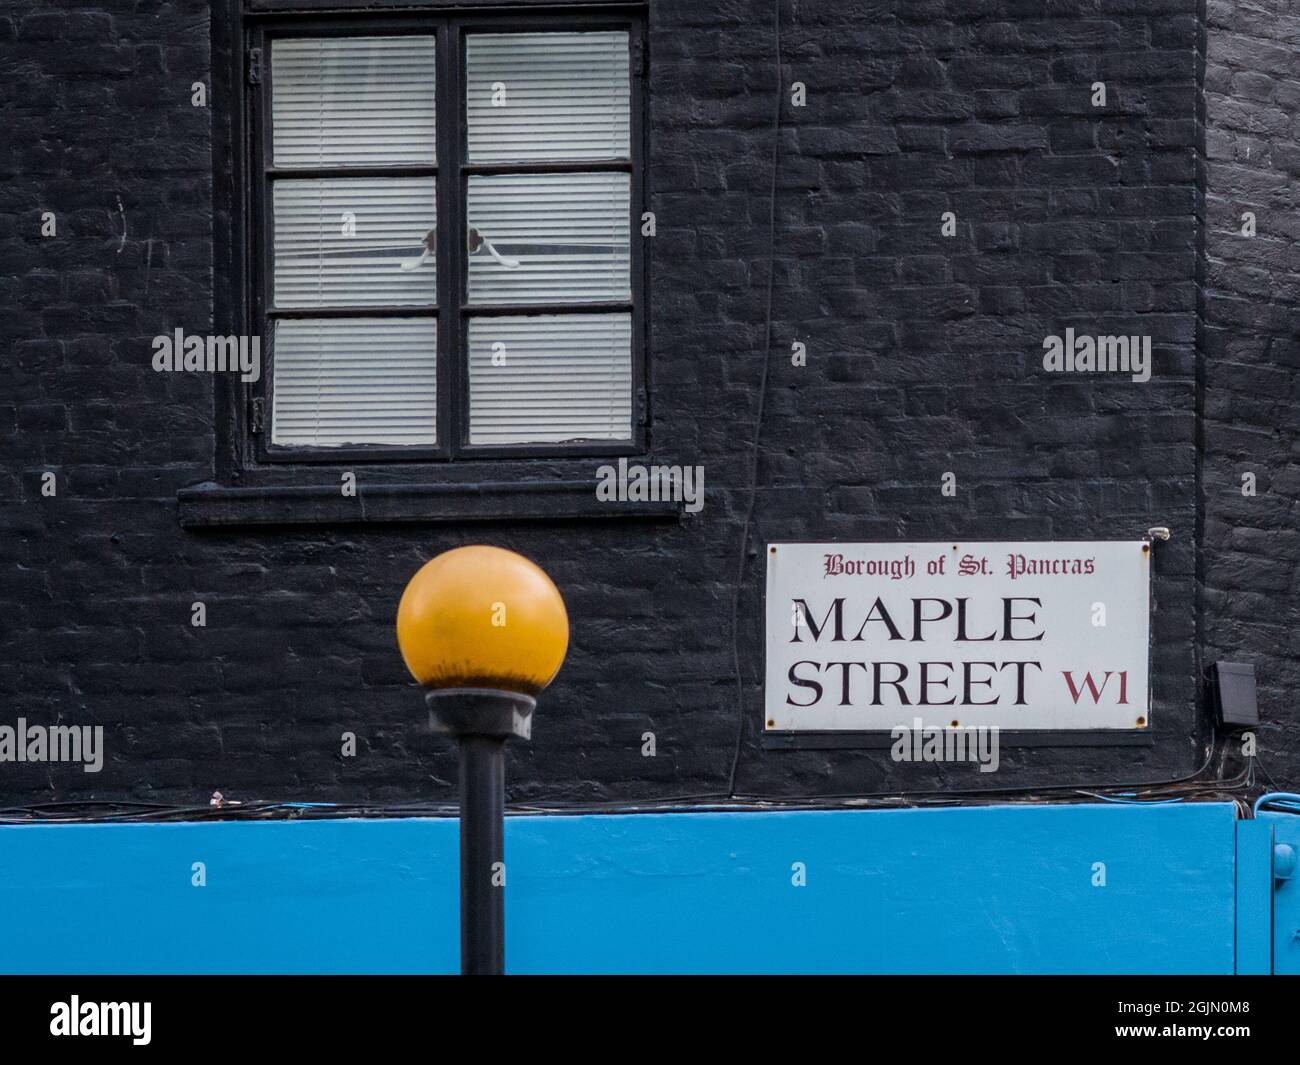 Maple Street Fitzrovia London - Maple St Sign - London Street Signs - Vintage London Street Sign - Maple Street W1 Borough of St Pancras Stock Photo